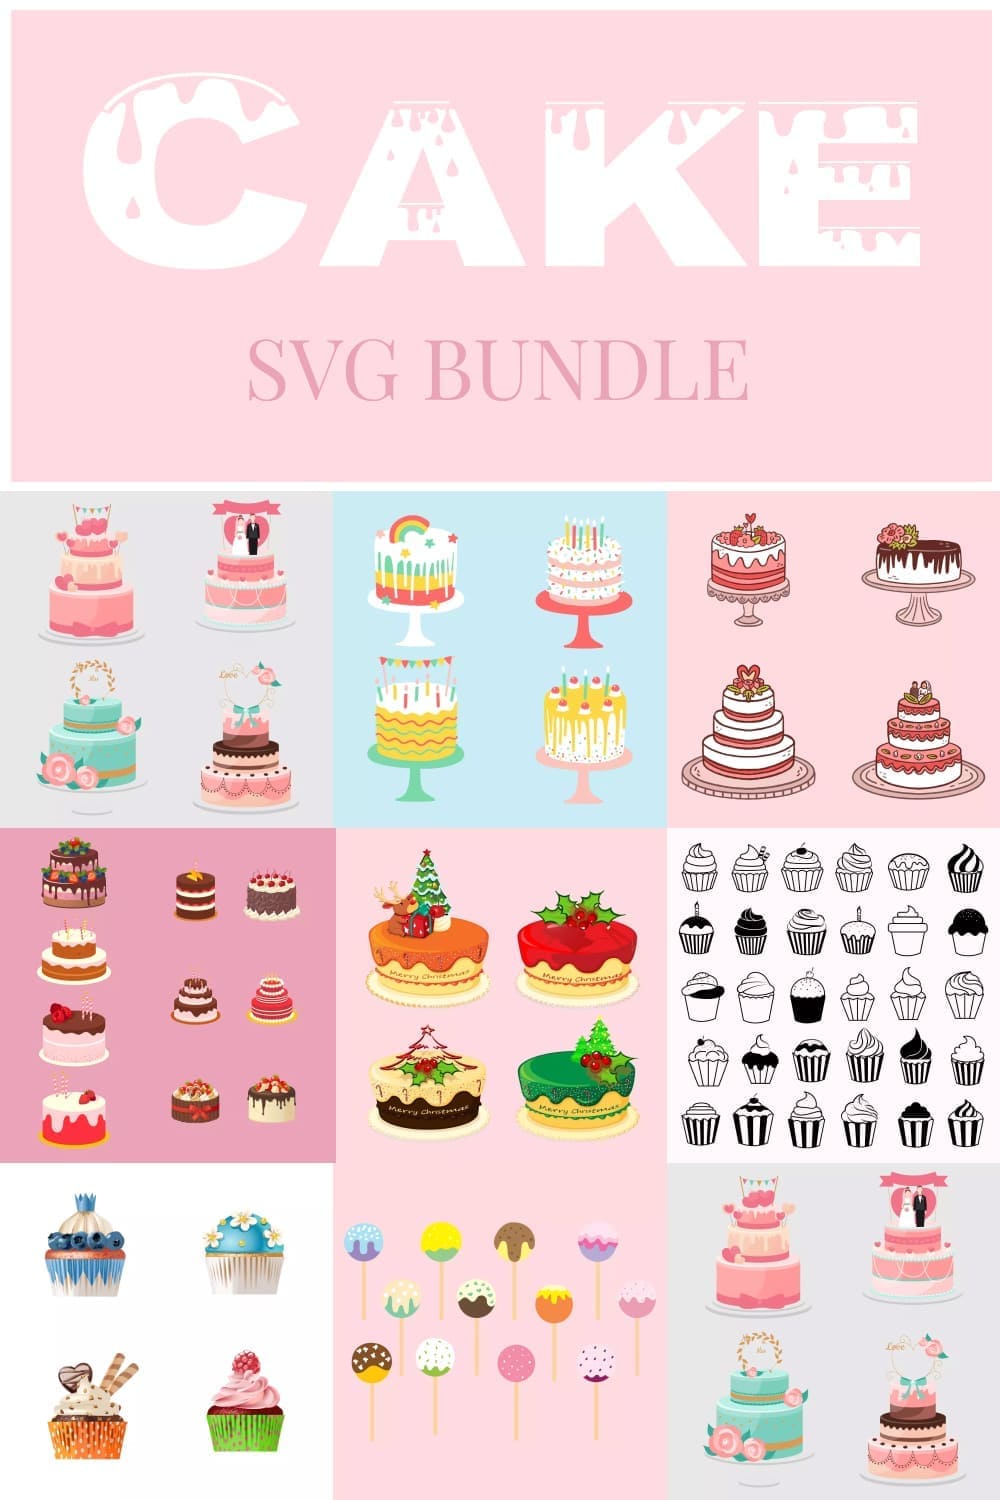 Cake SVG bundle, image pinterest 1000x1500.